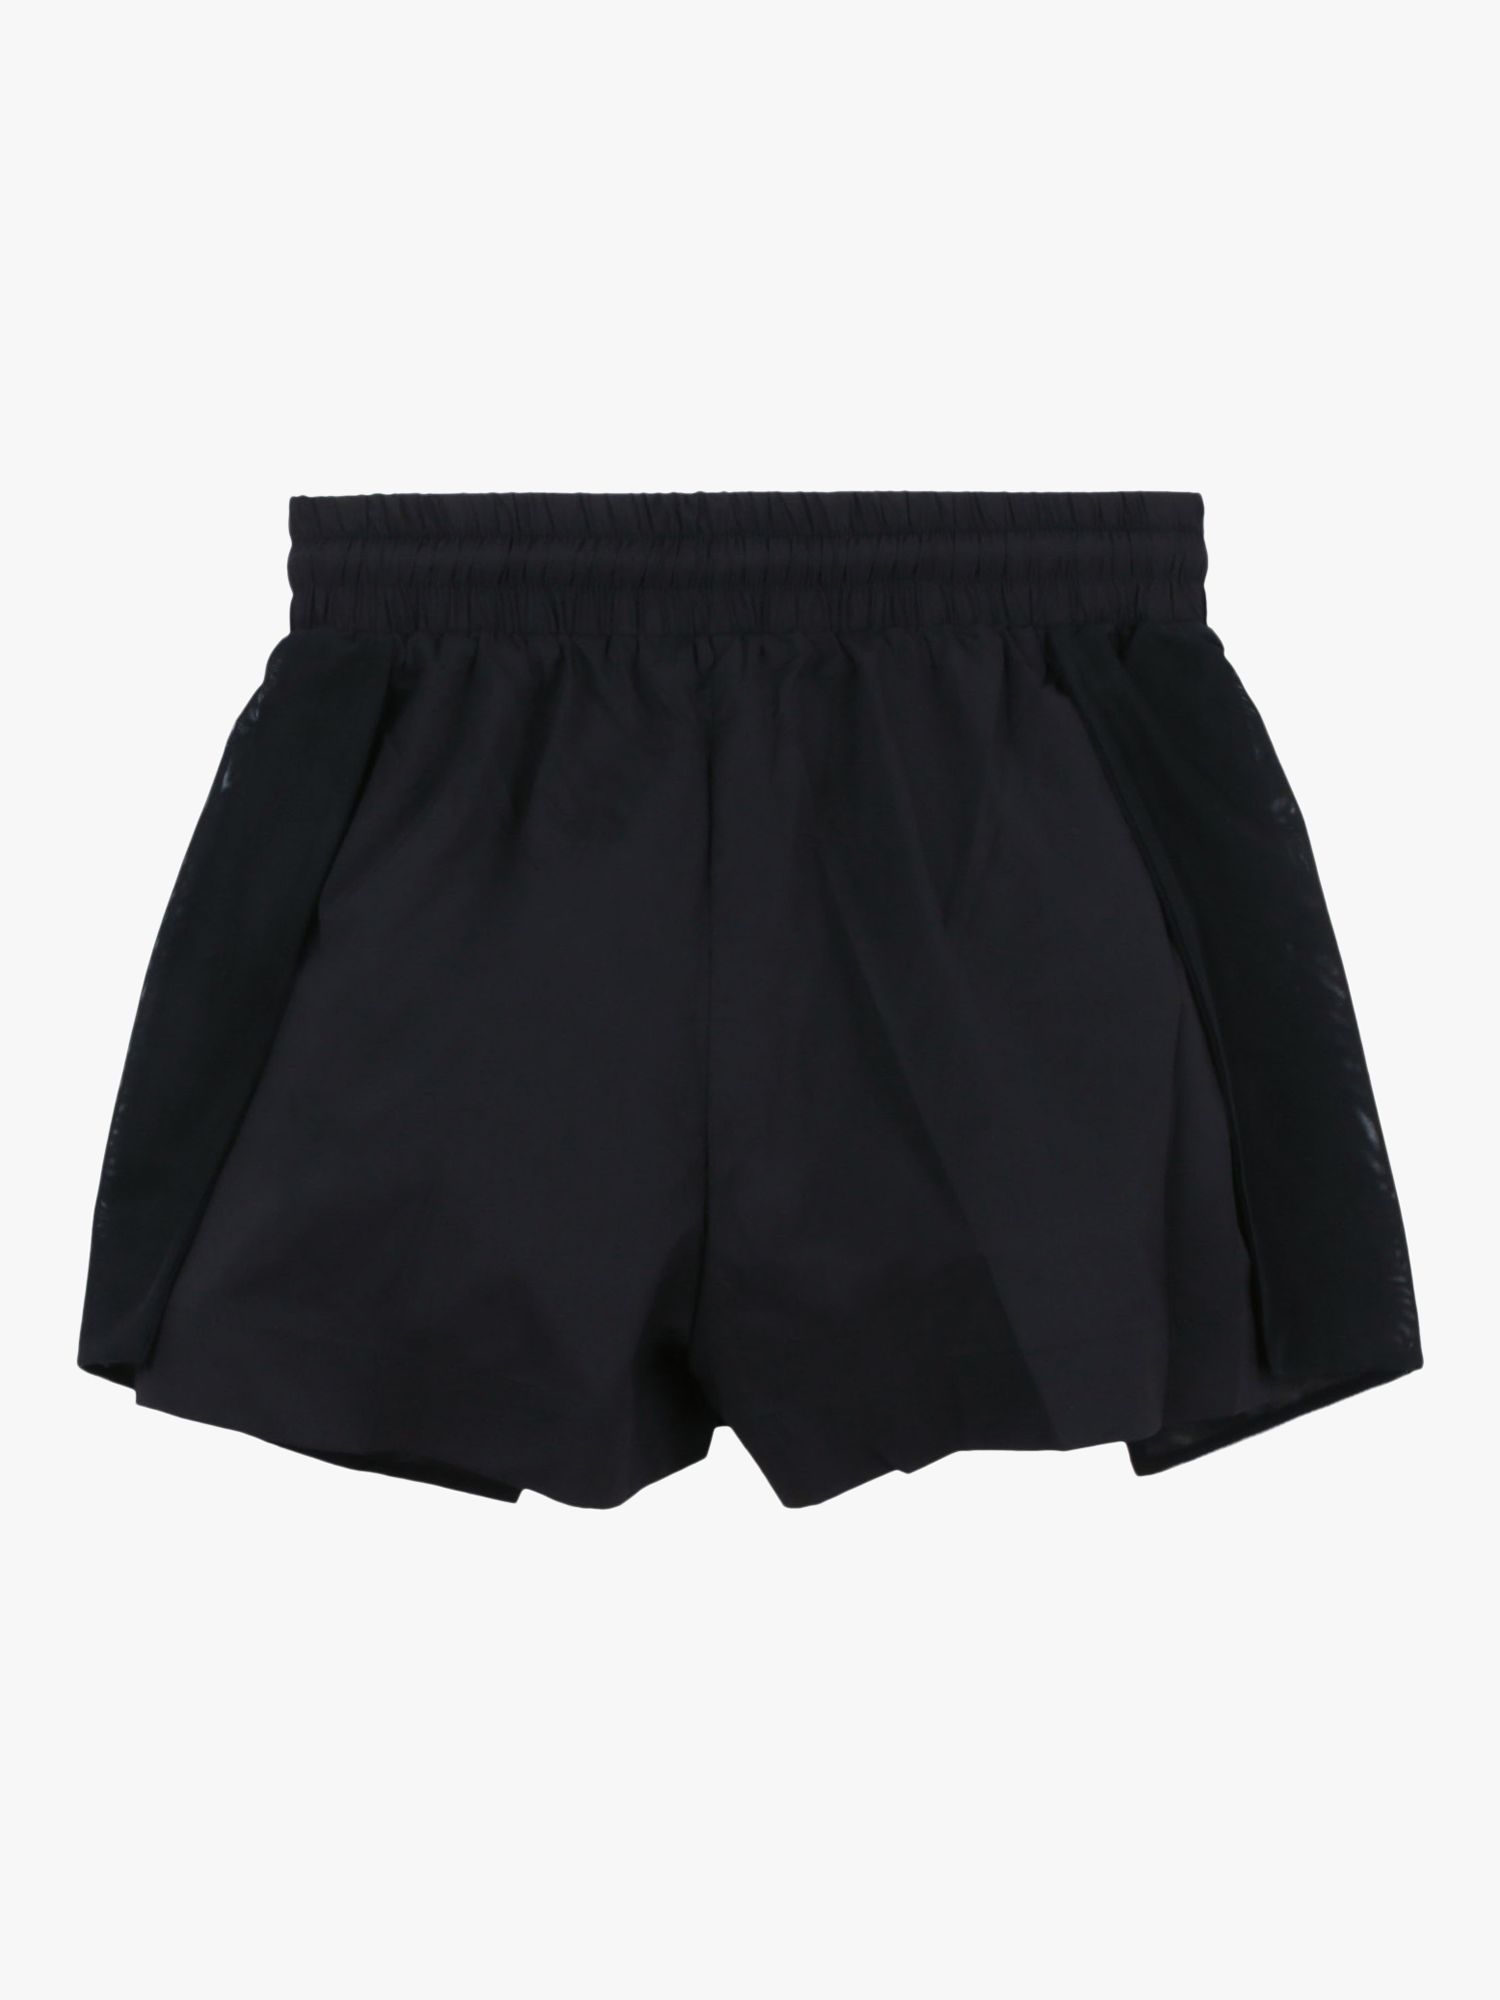 DKNY Kids' Novelty Mesh Shorts, Black, 4 years